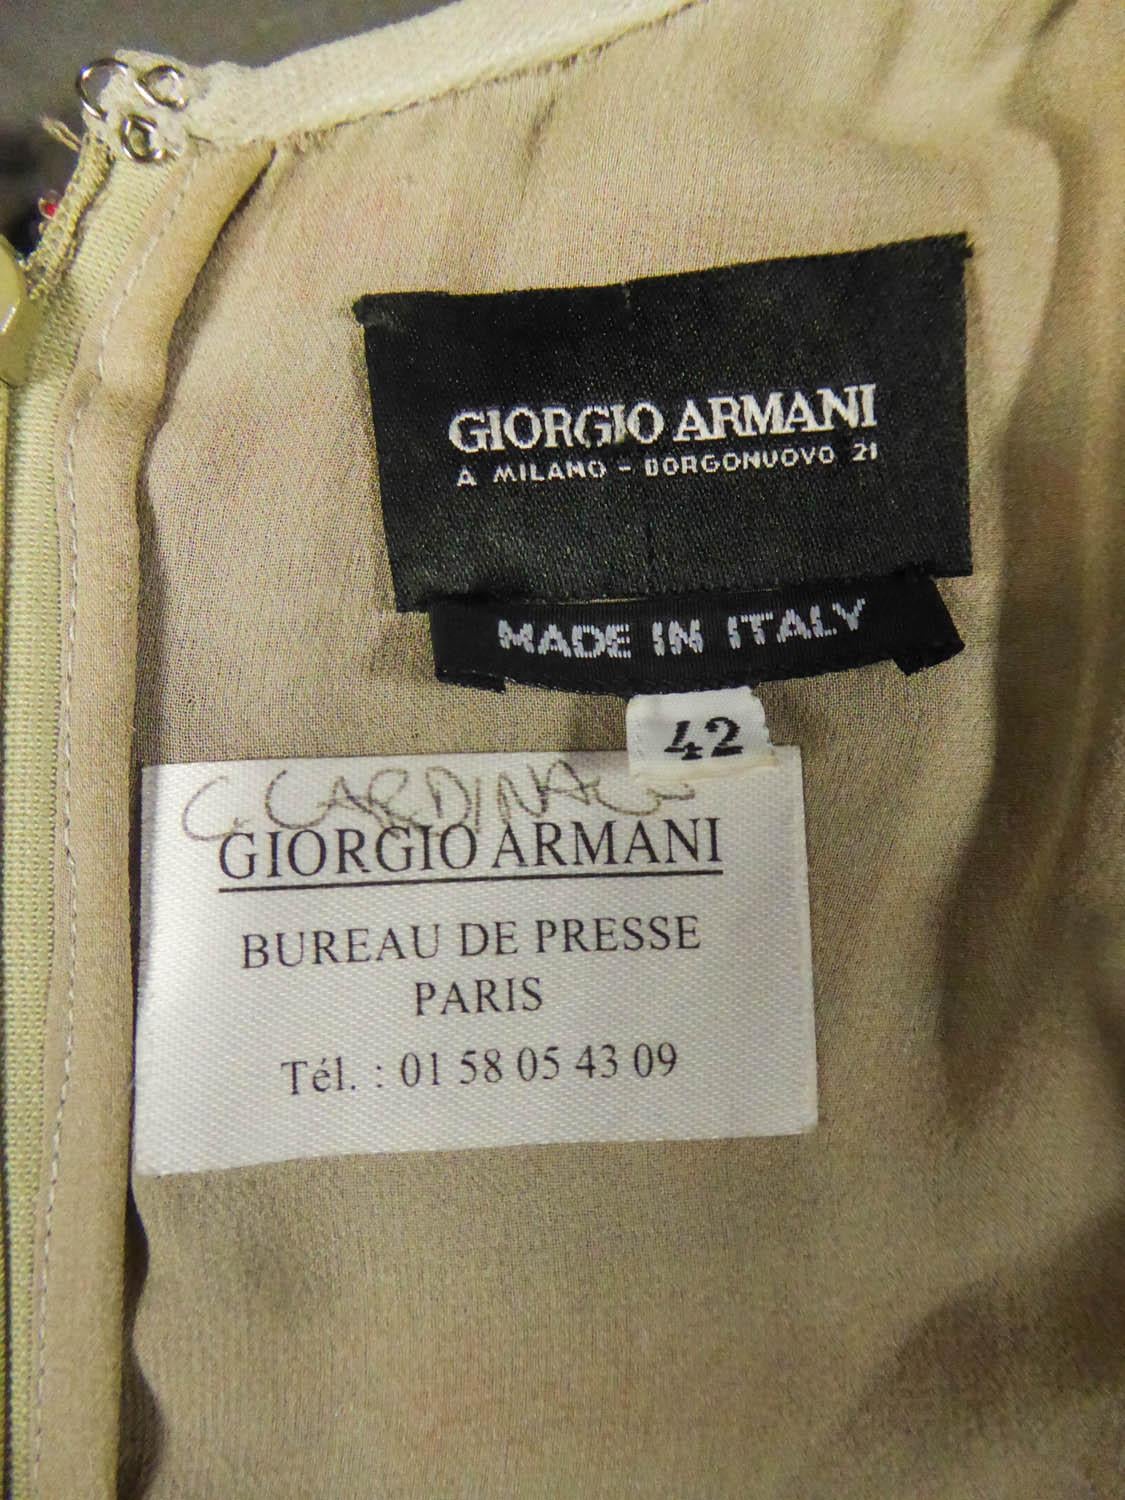 Giorgio Armani Couture fashion show dress worn by Claudia Cardinale - Circa 2000 For Sale 5